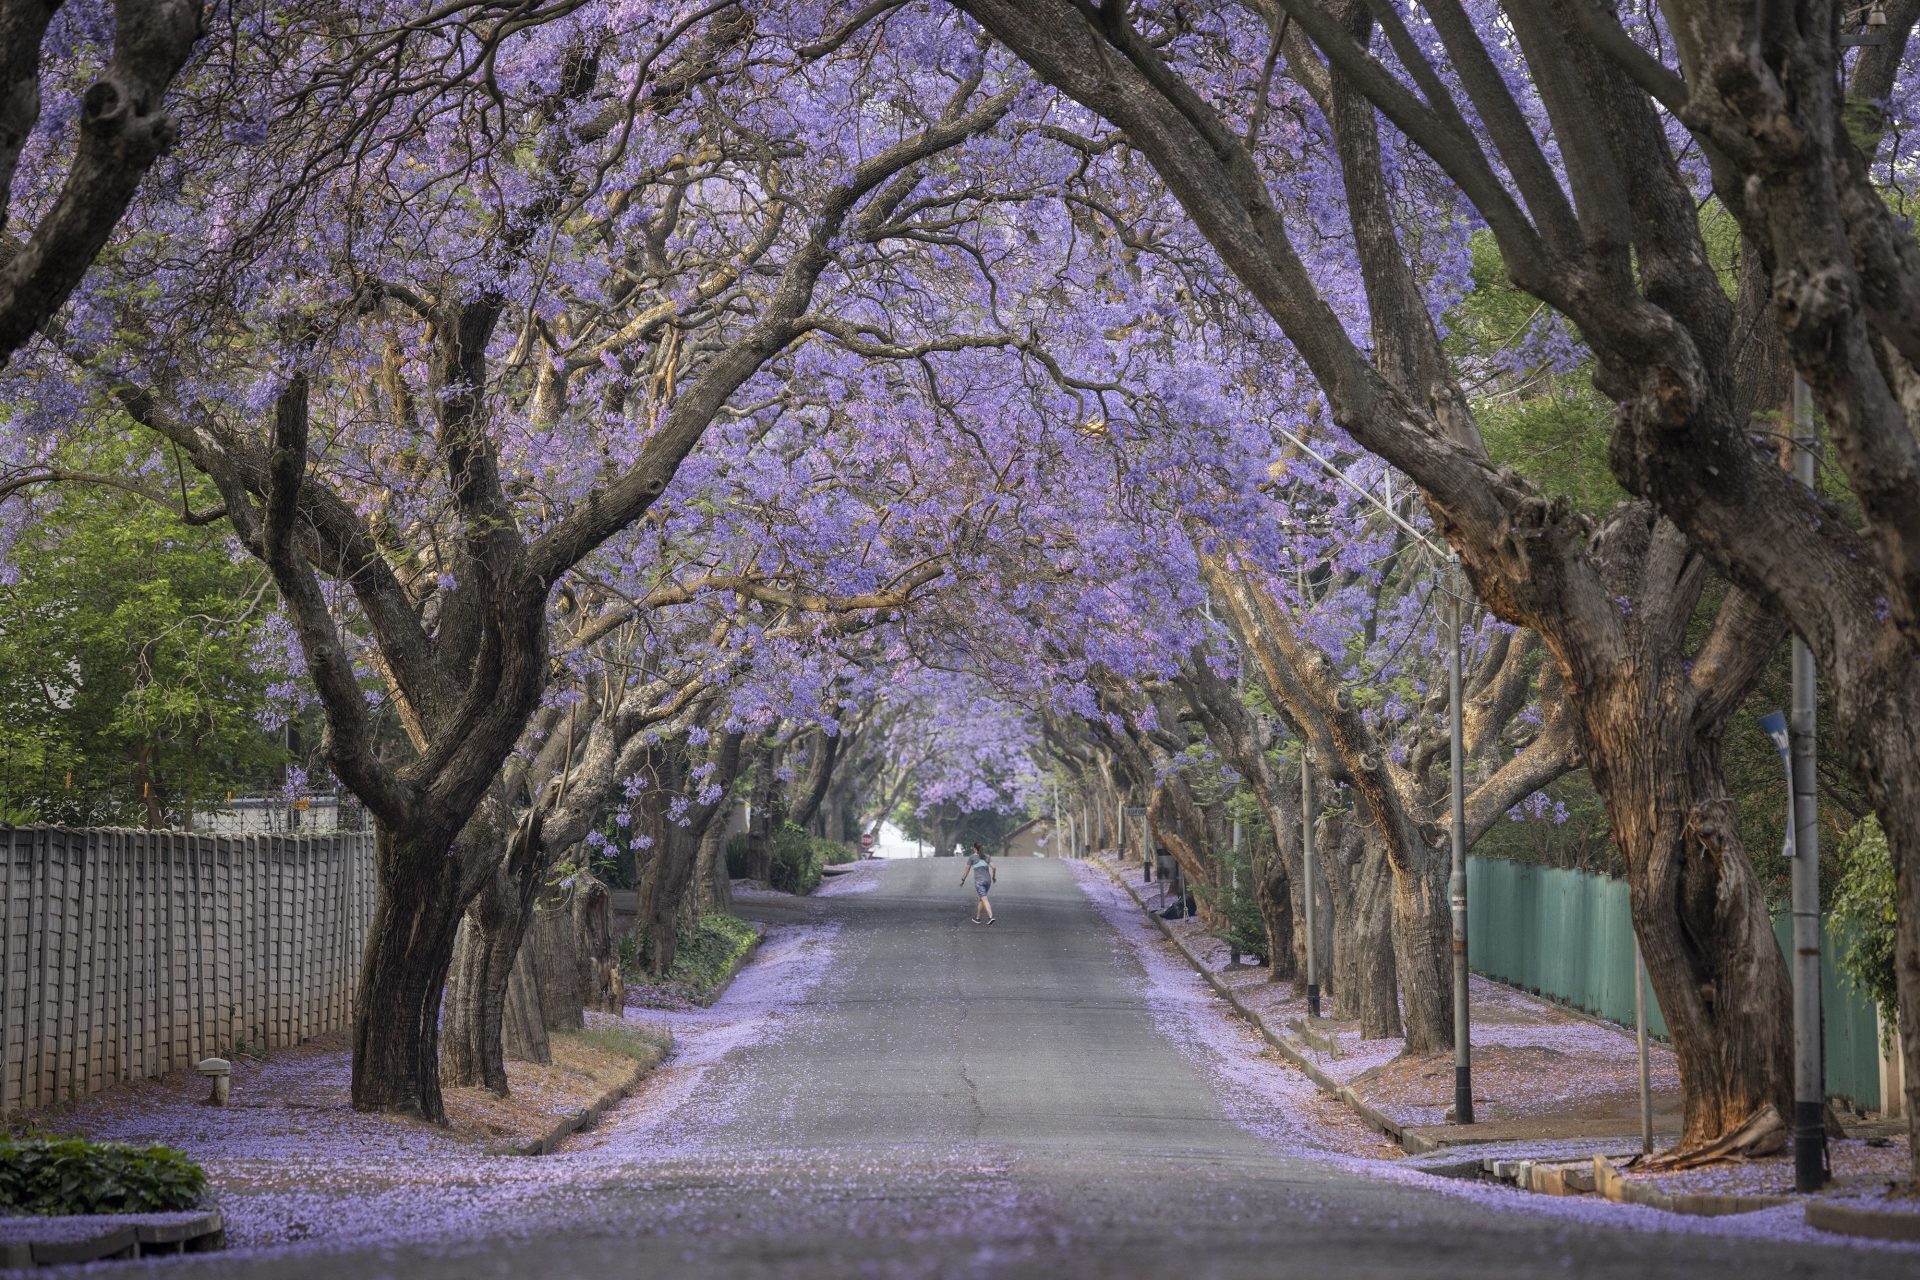 Jacaranda blooms in Pretoria, South Africa